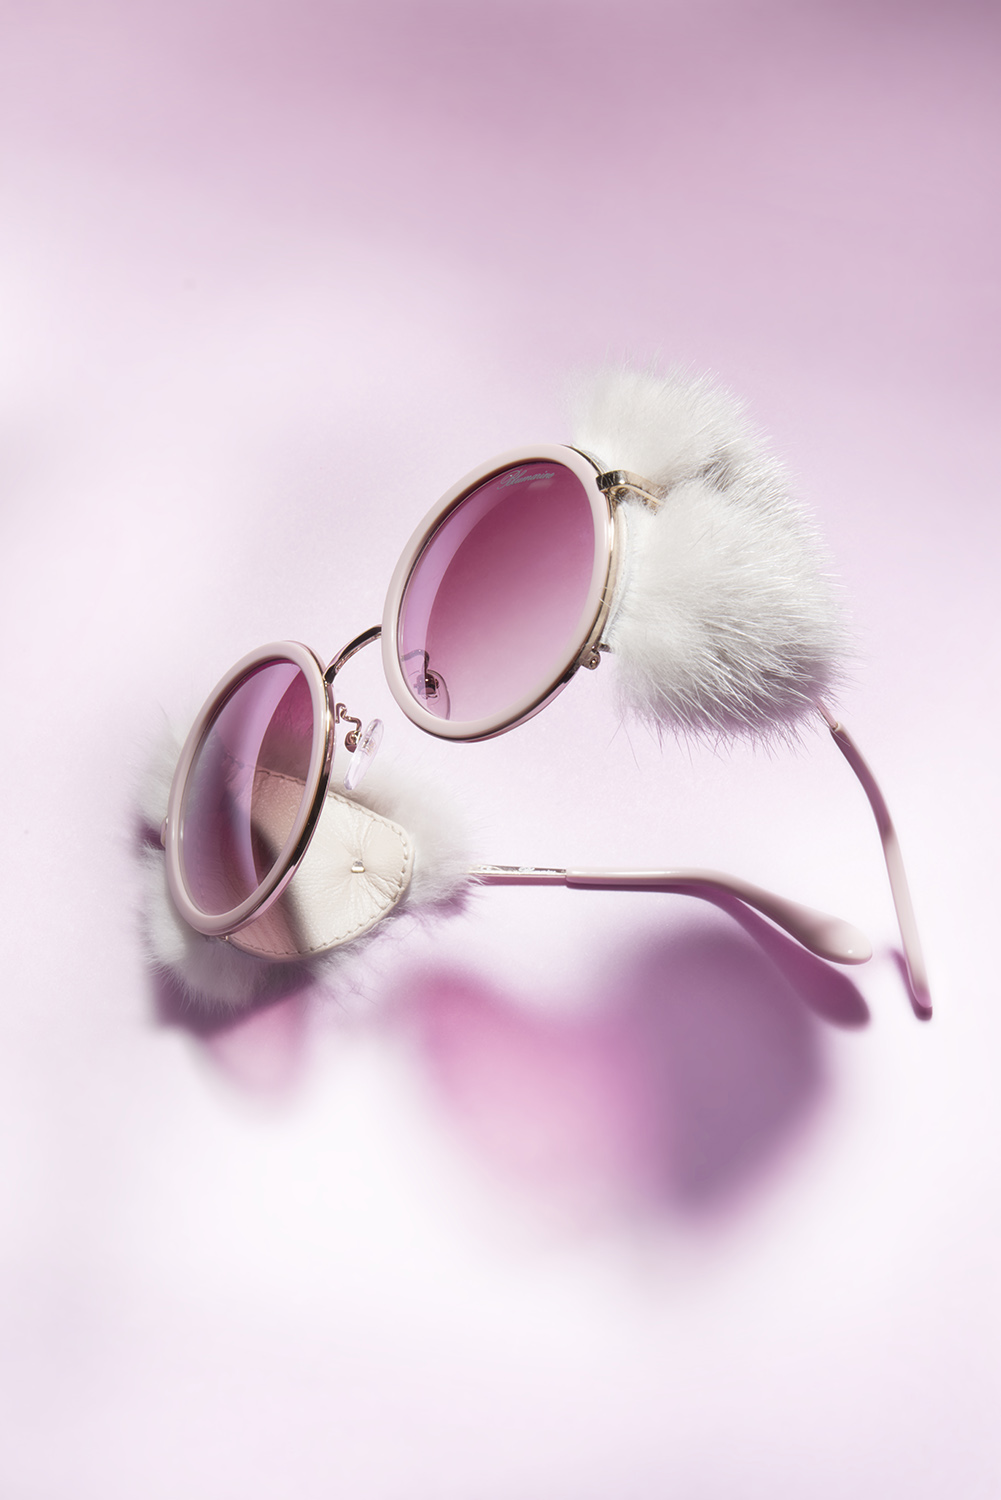 blumarine anniversary apres ski sunglasses on pink background